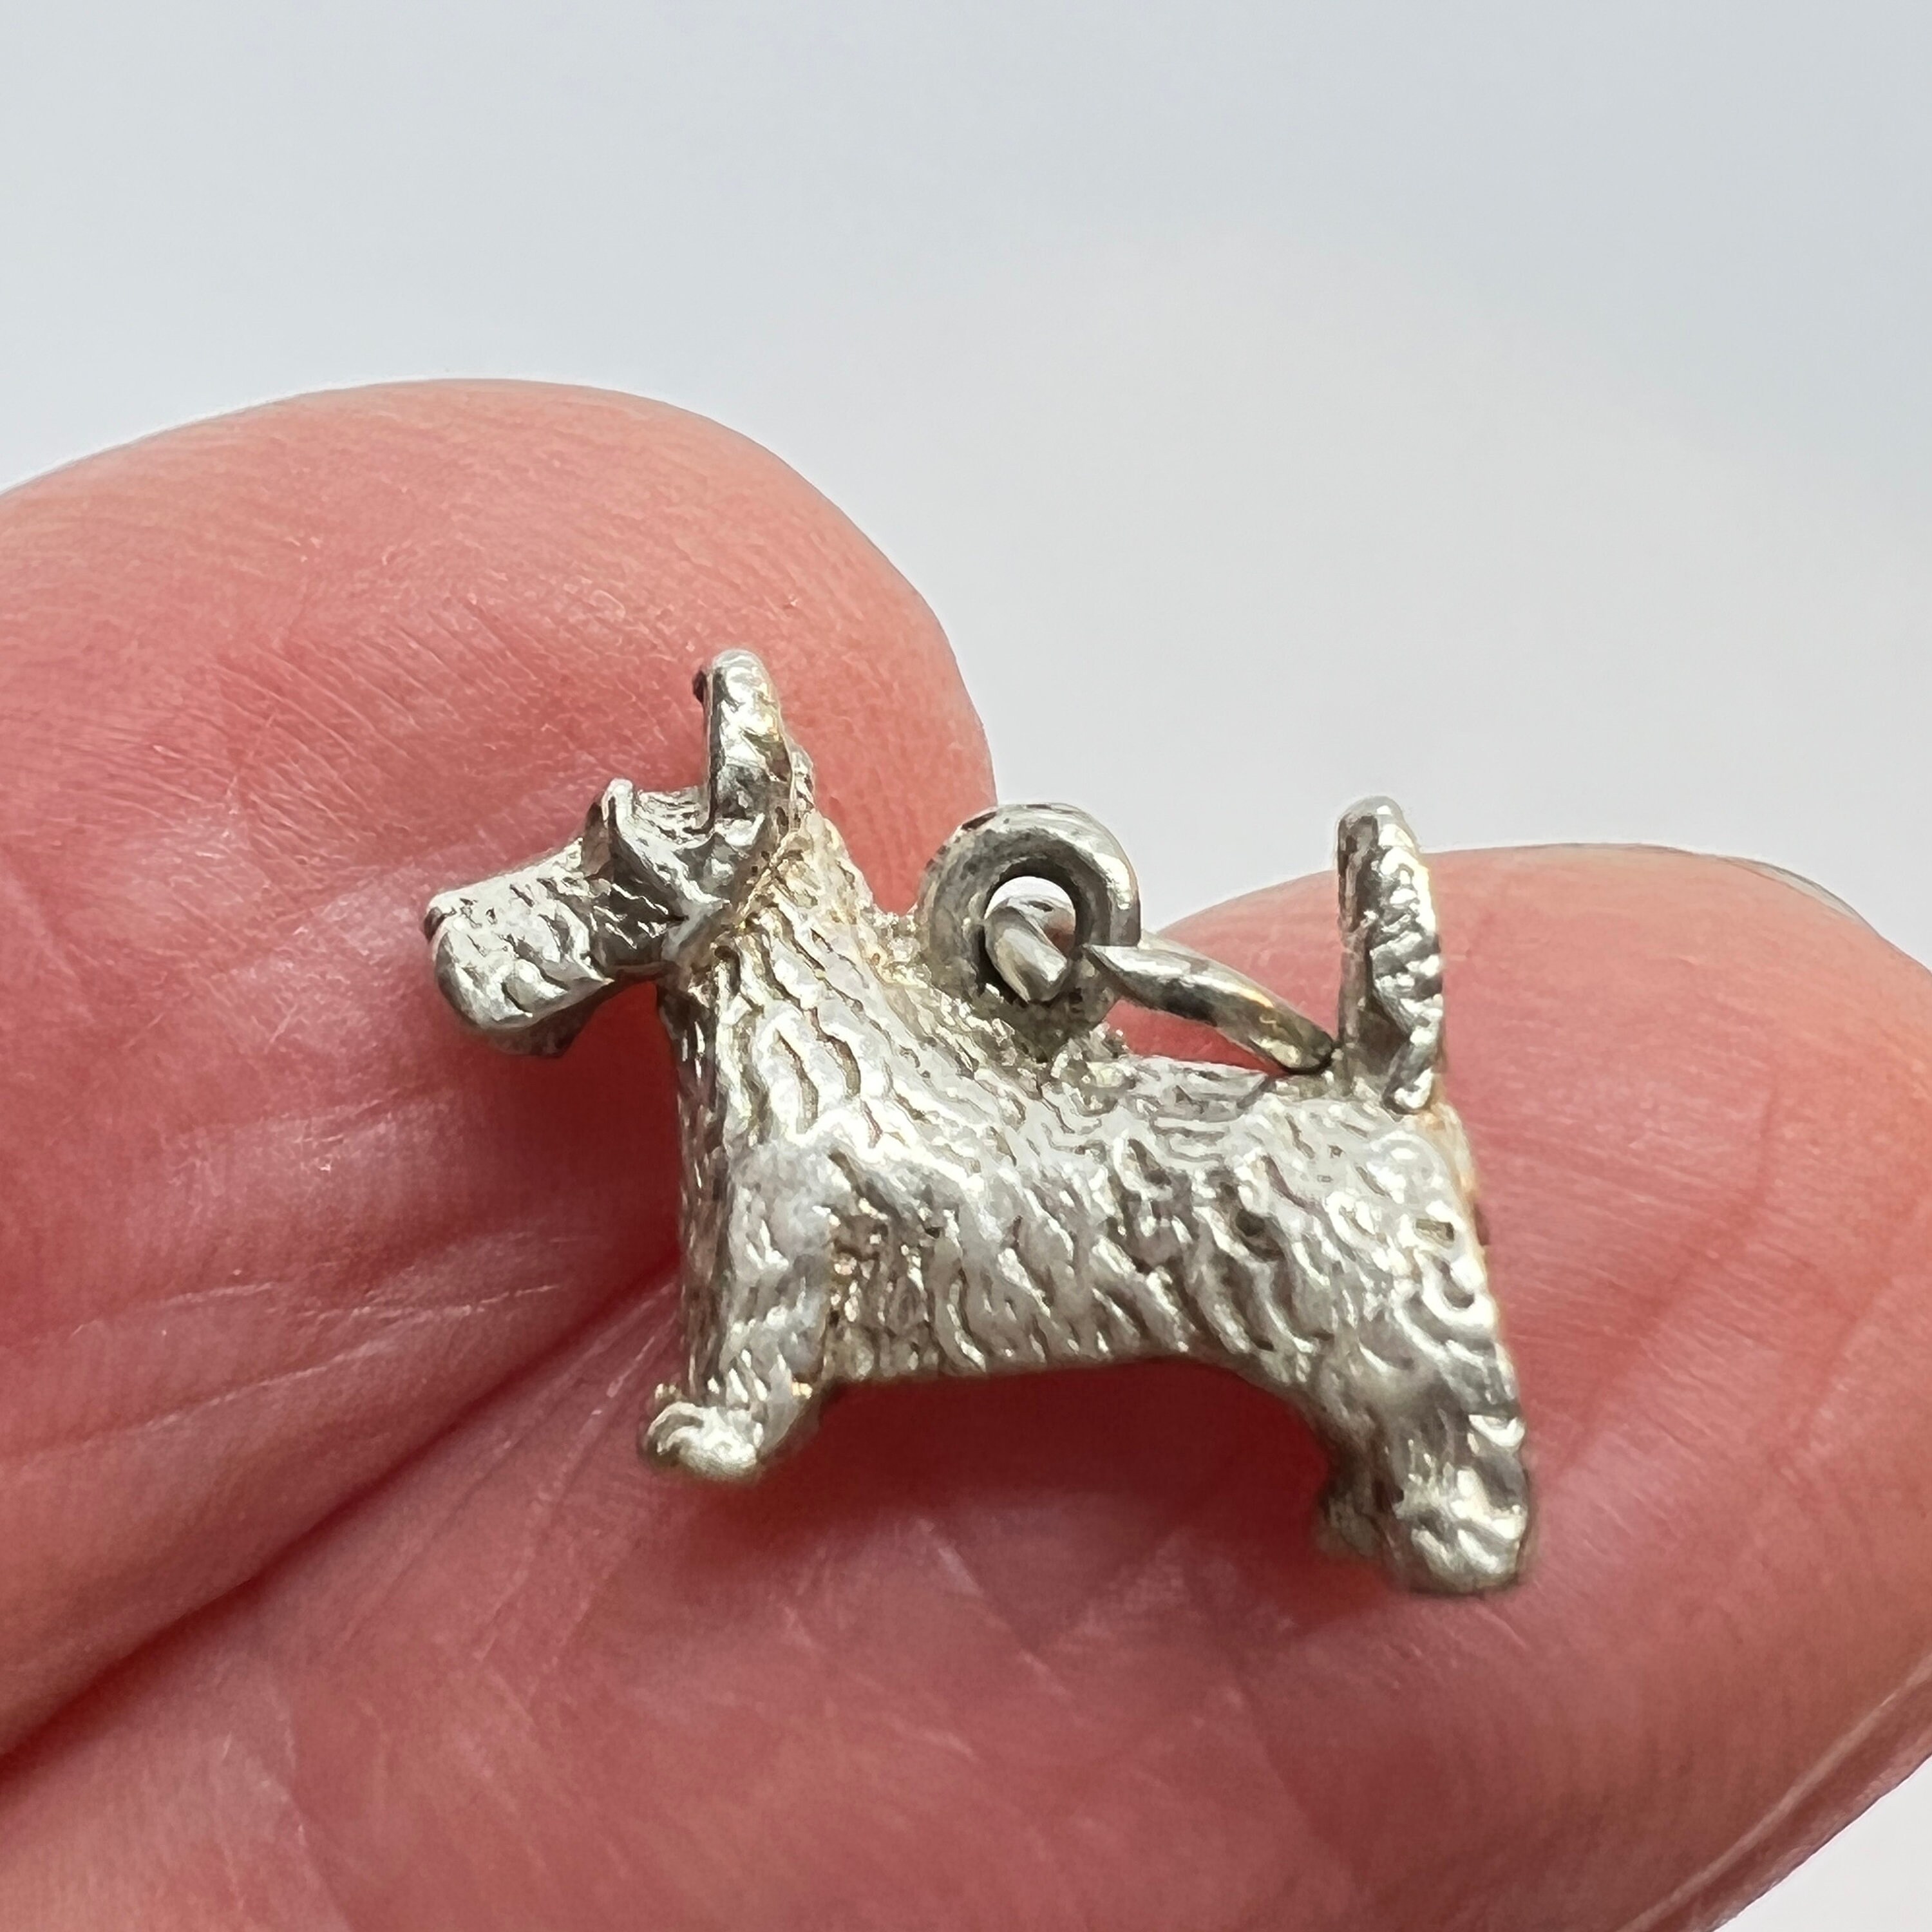 10 Dog Charms Scottie Pendants Assorted Charms Antiqued Silver Schnauzer Set 